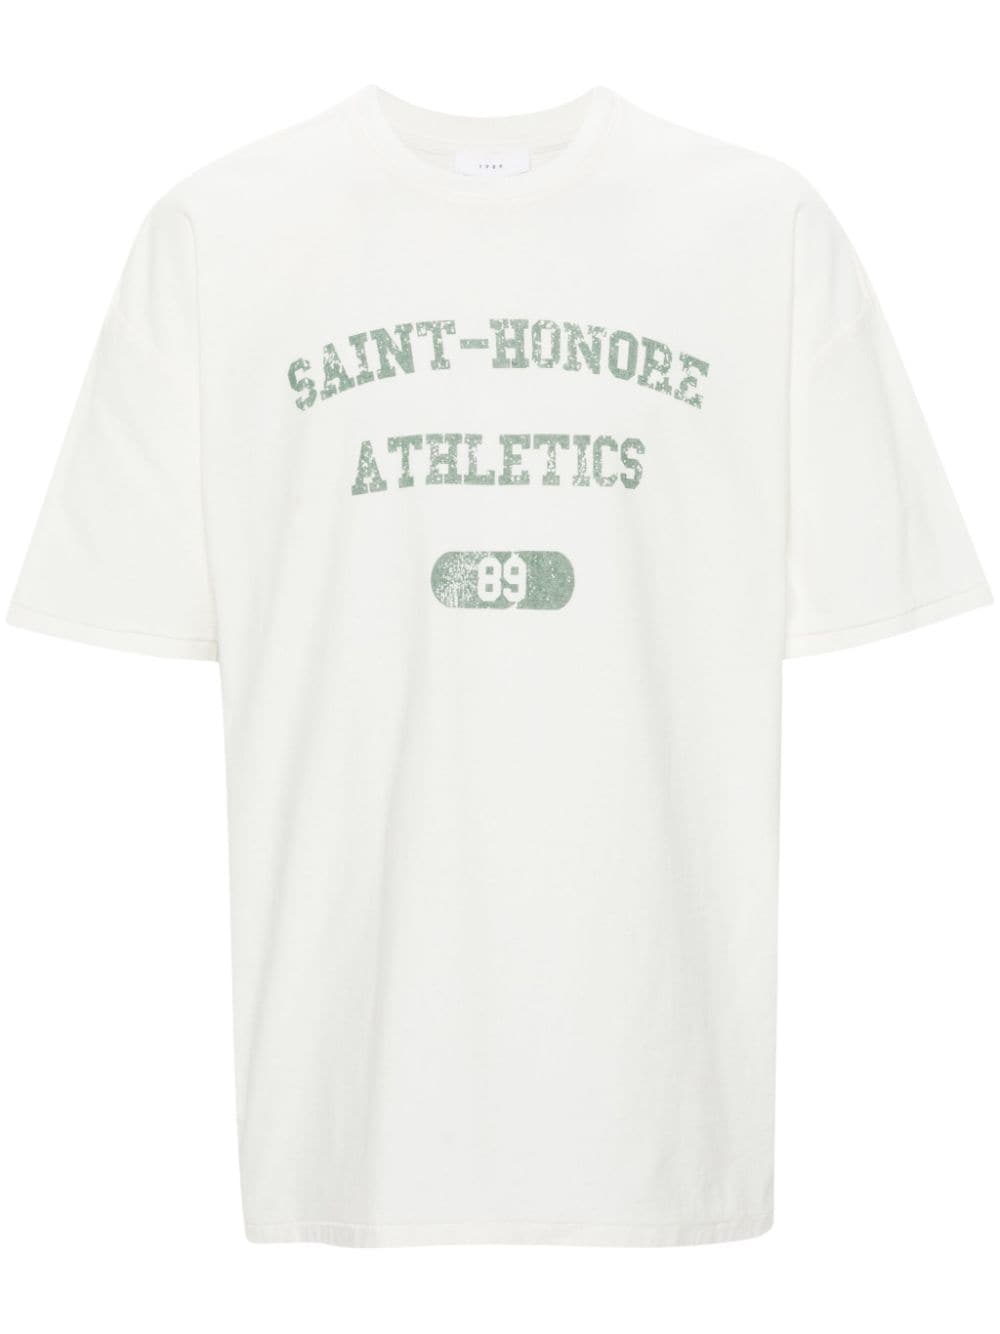 1989 Studio Saint Honore Athletics T-shirt In Vintage White